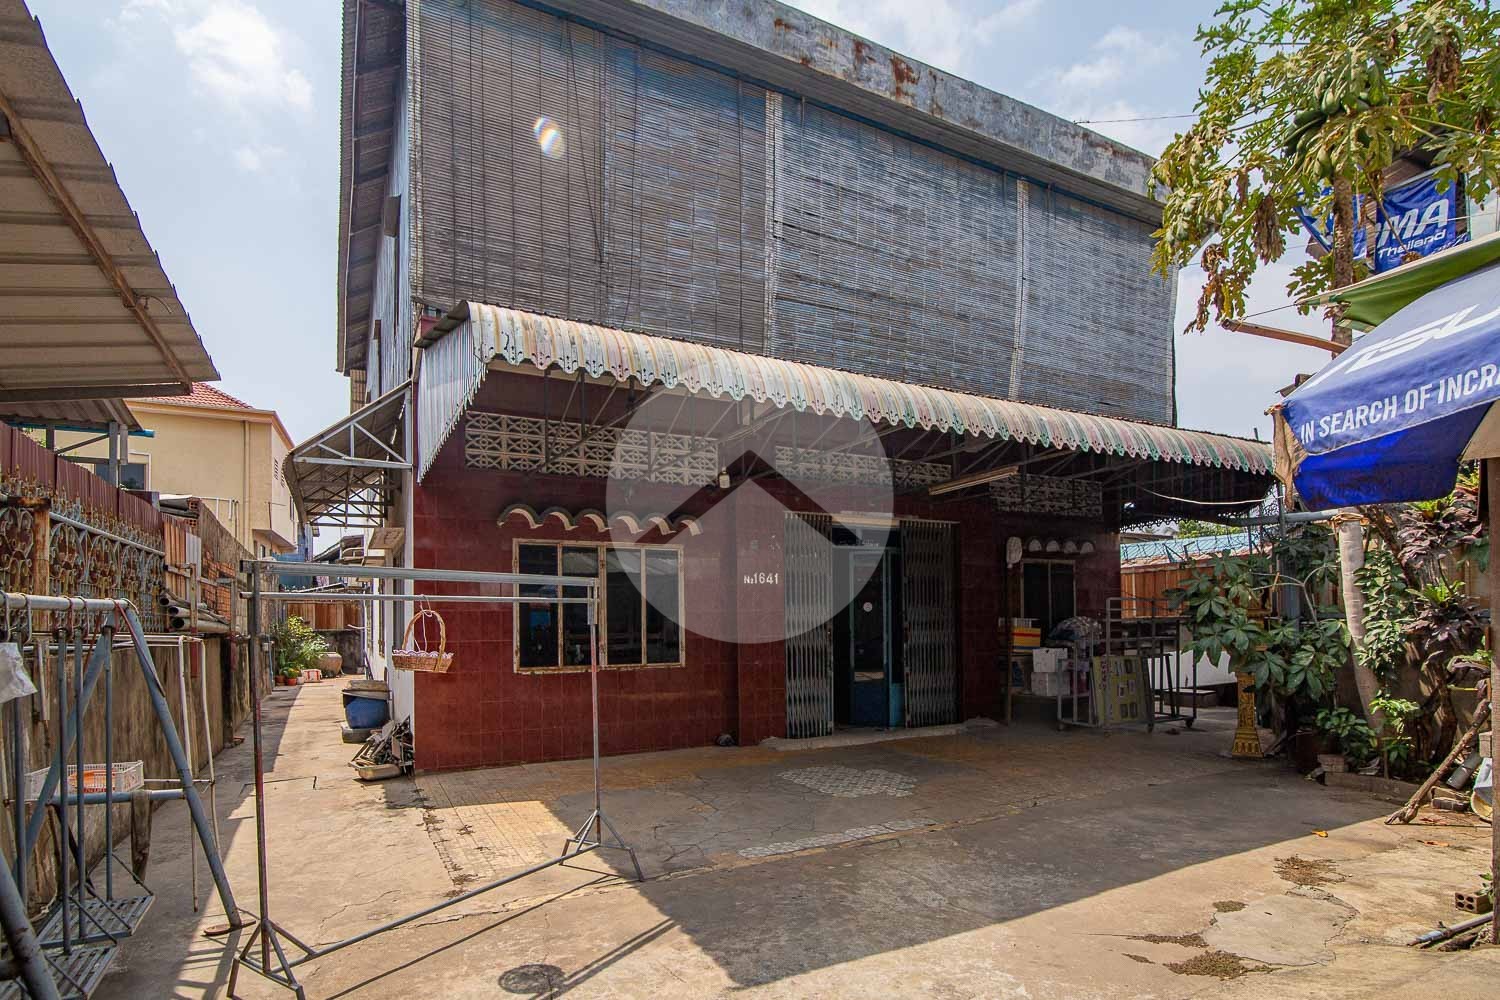 488 Sqm Land For Sale - Khan Meanchey, Phnom Penh thumbnail